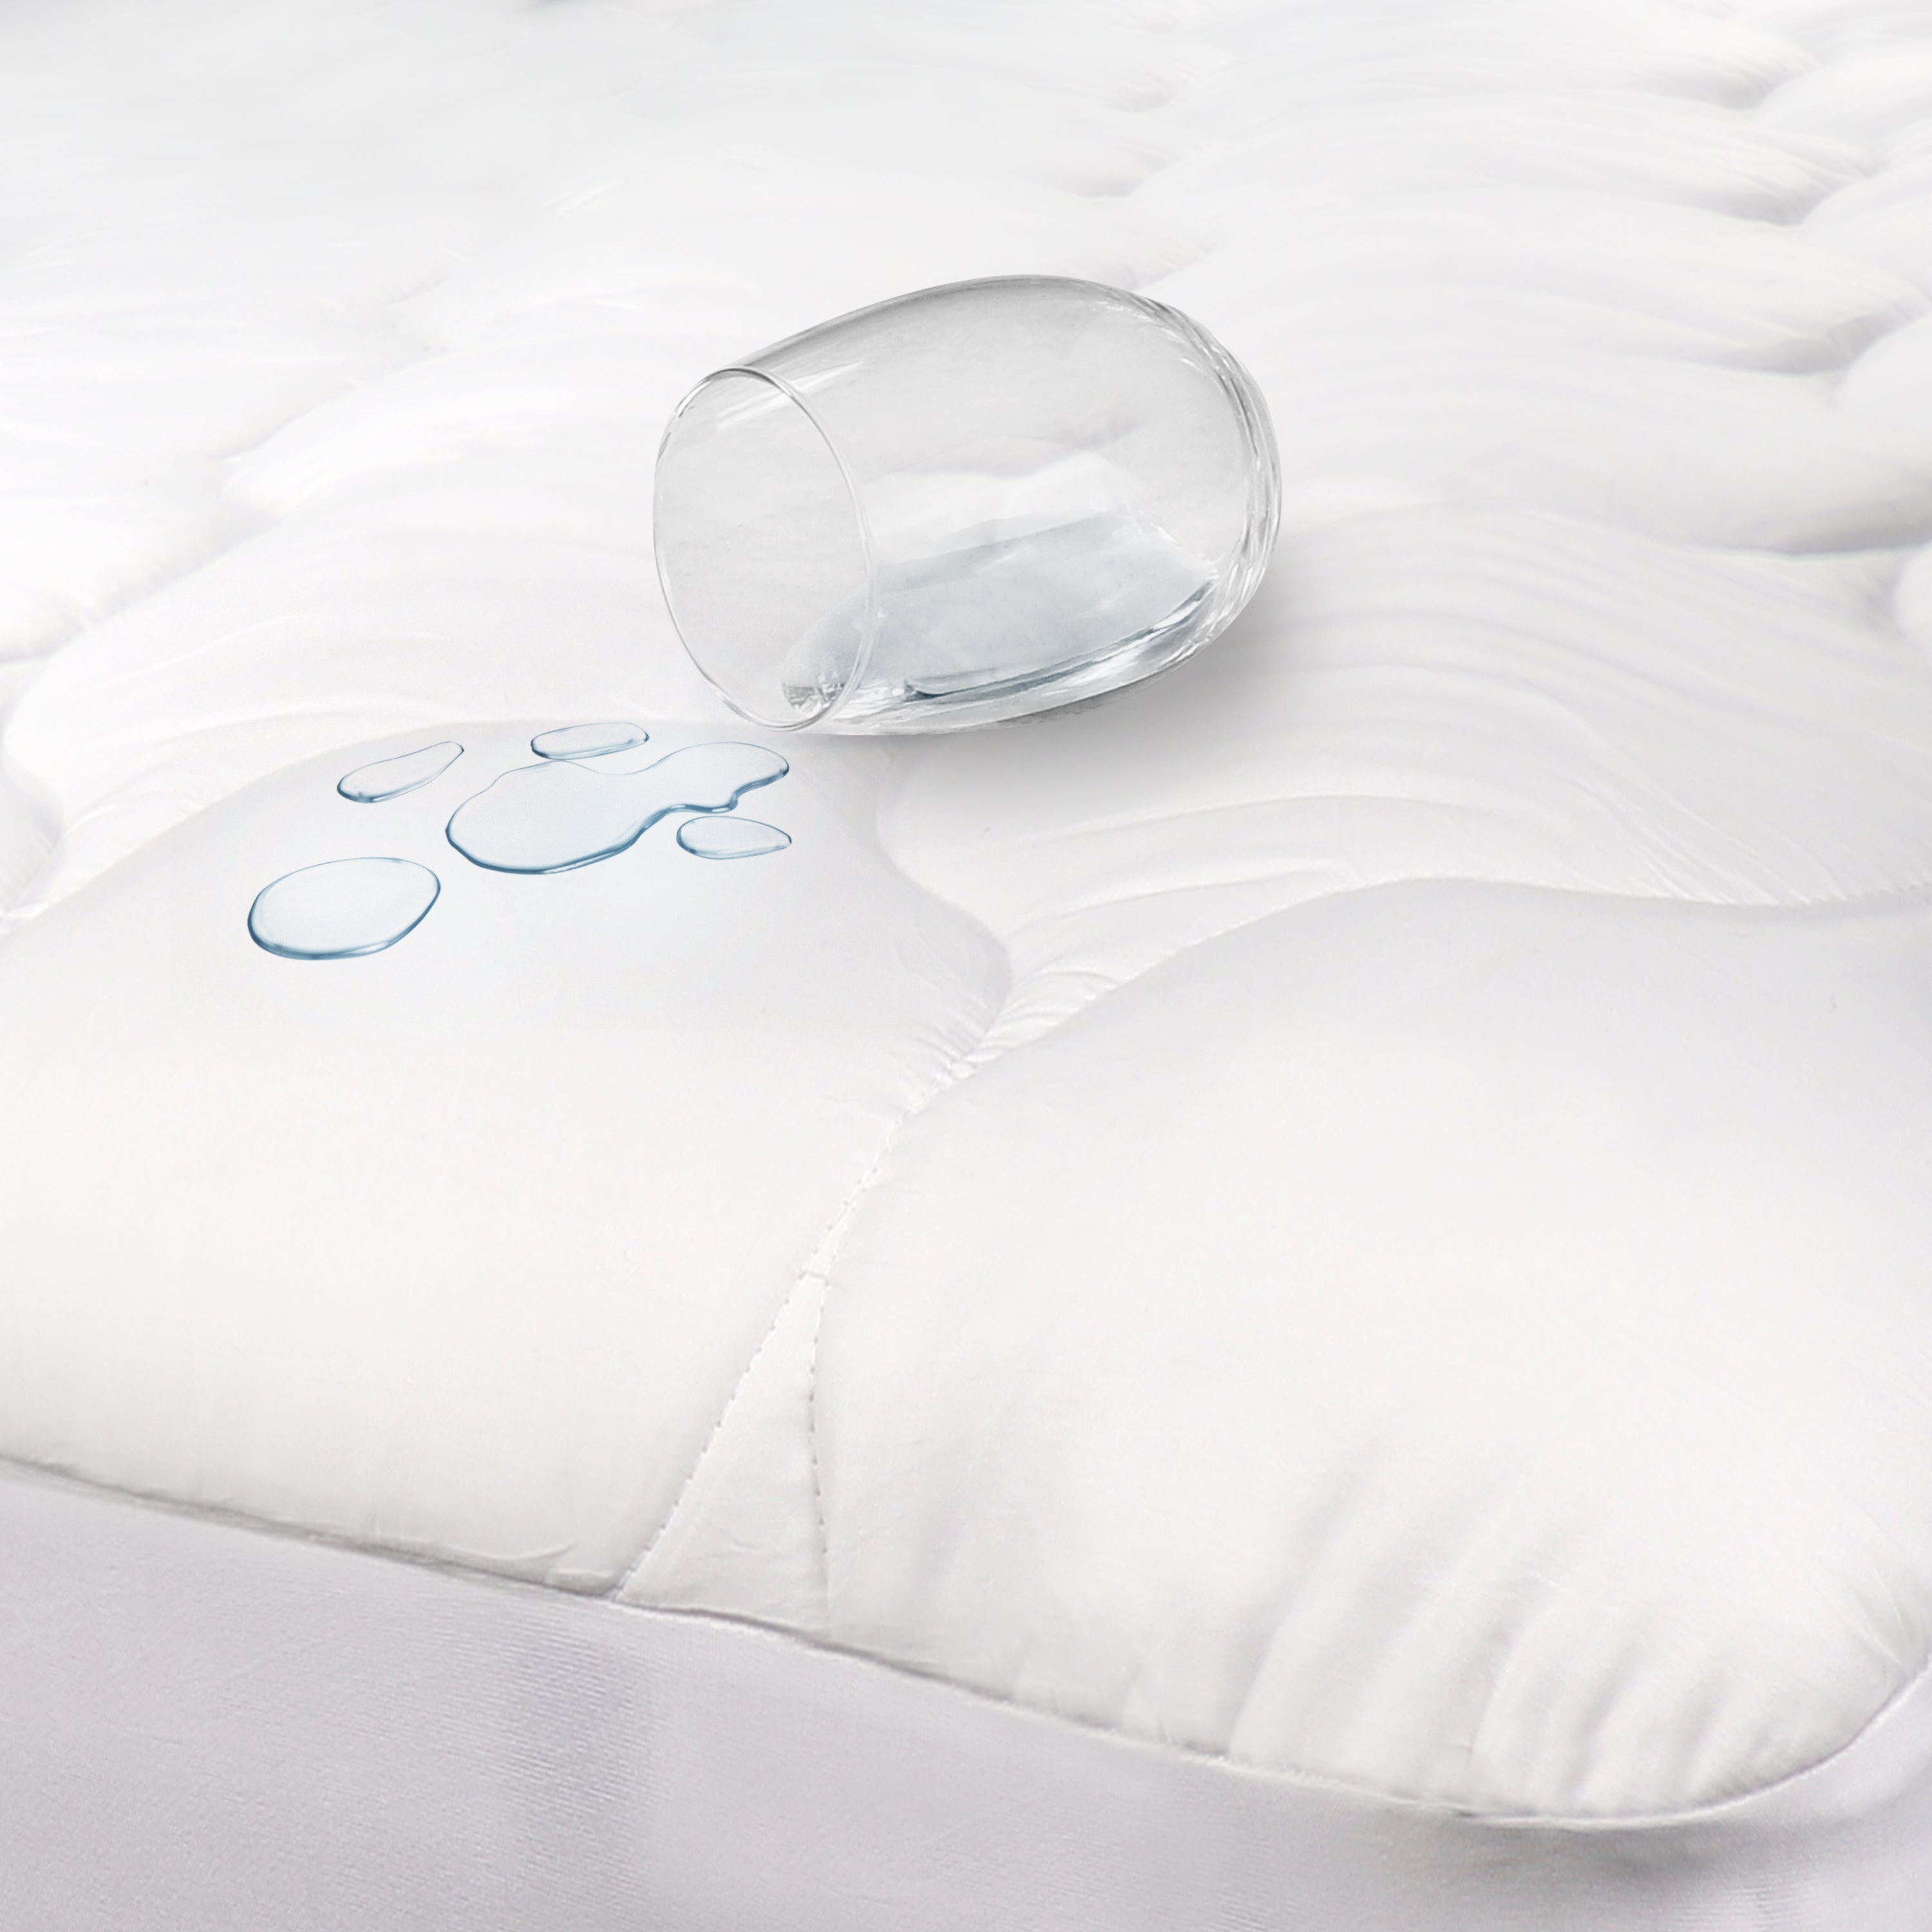 Buy Mattress Topper Memory Foam with Anti-Bacterial Fabric - Durfi